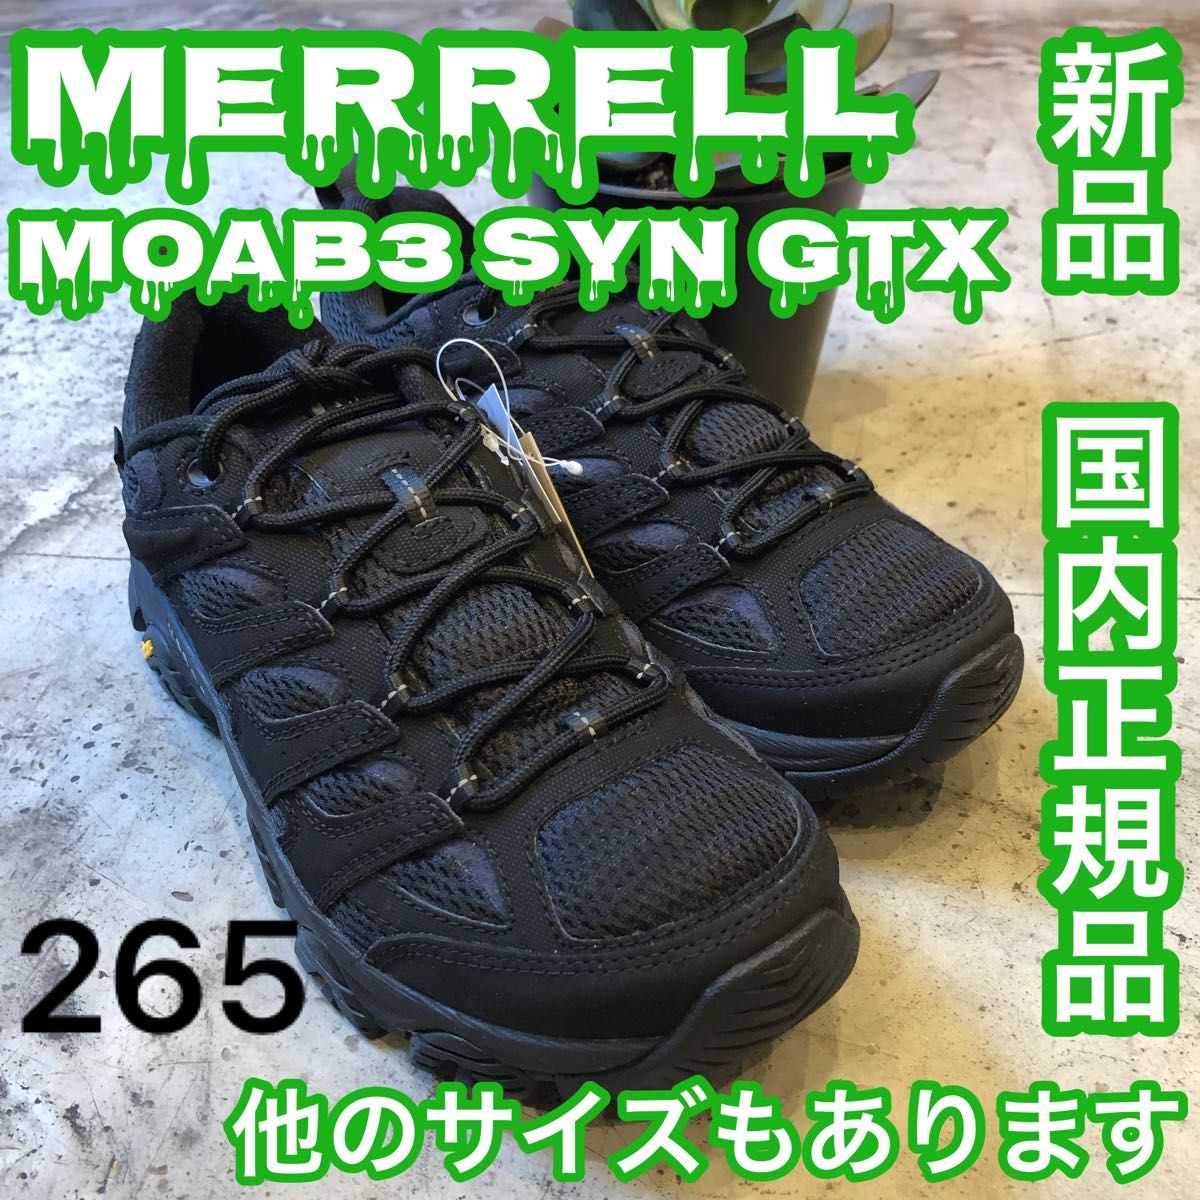 MERRELL MOAB3 SYN GTX TRP/BL US9 26.5㎝ GORE-TEX ブラック